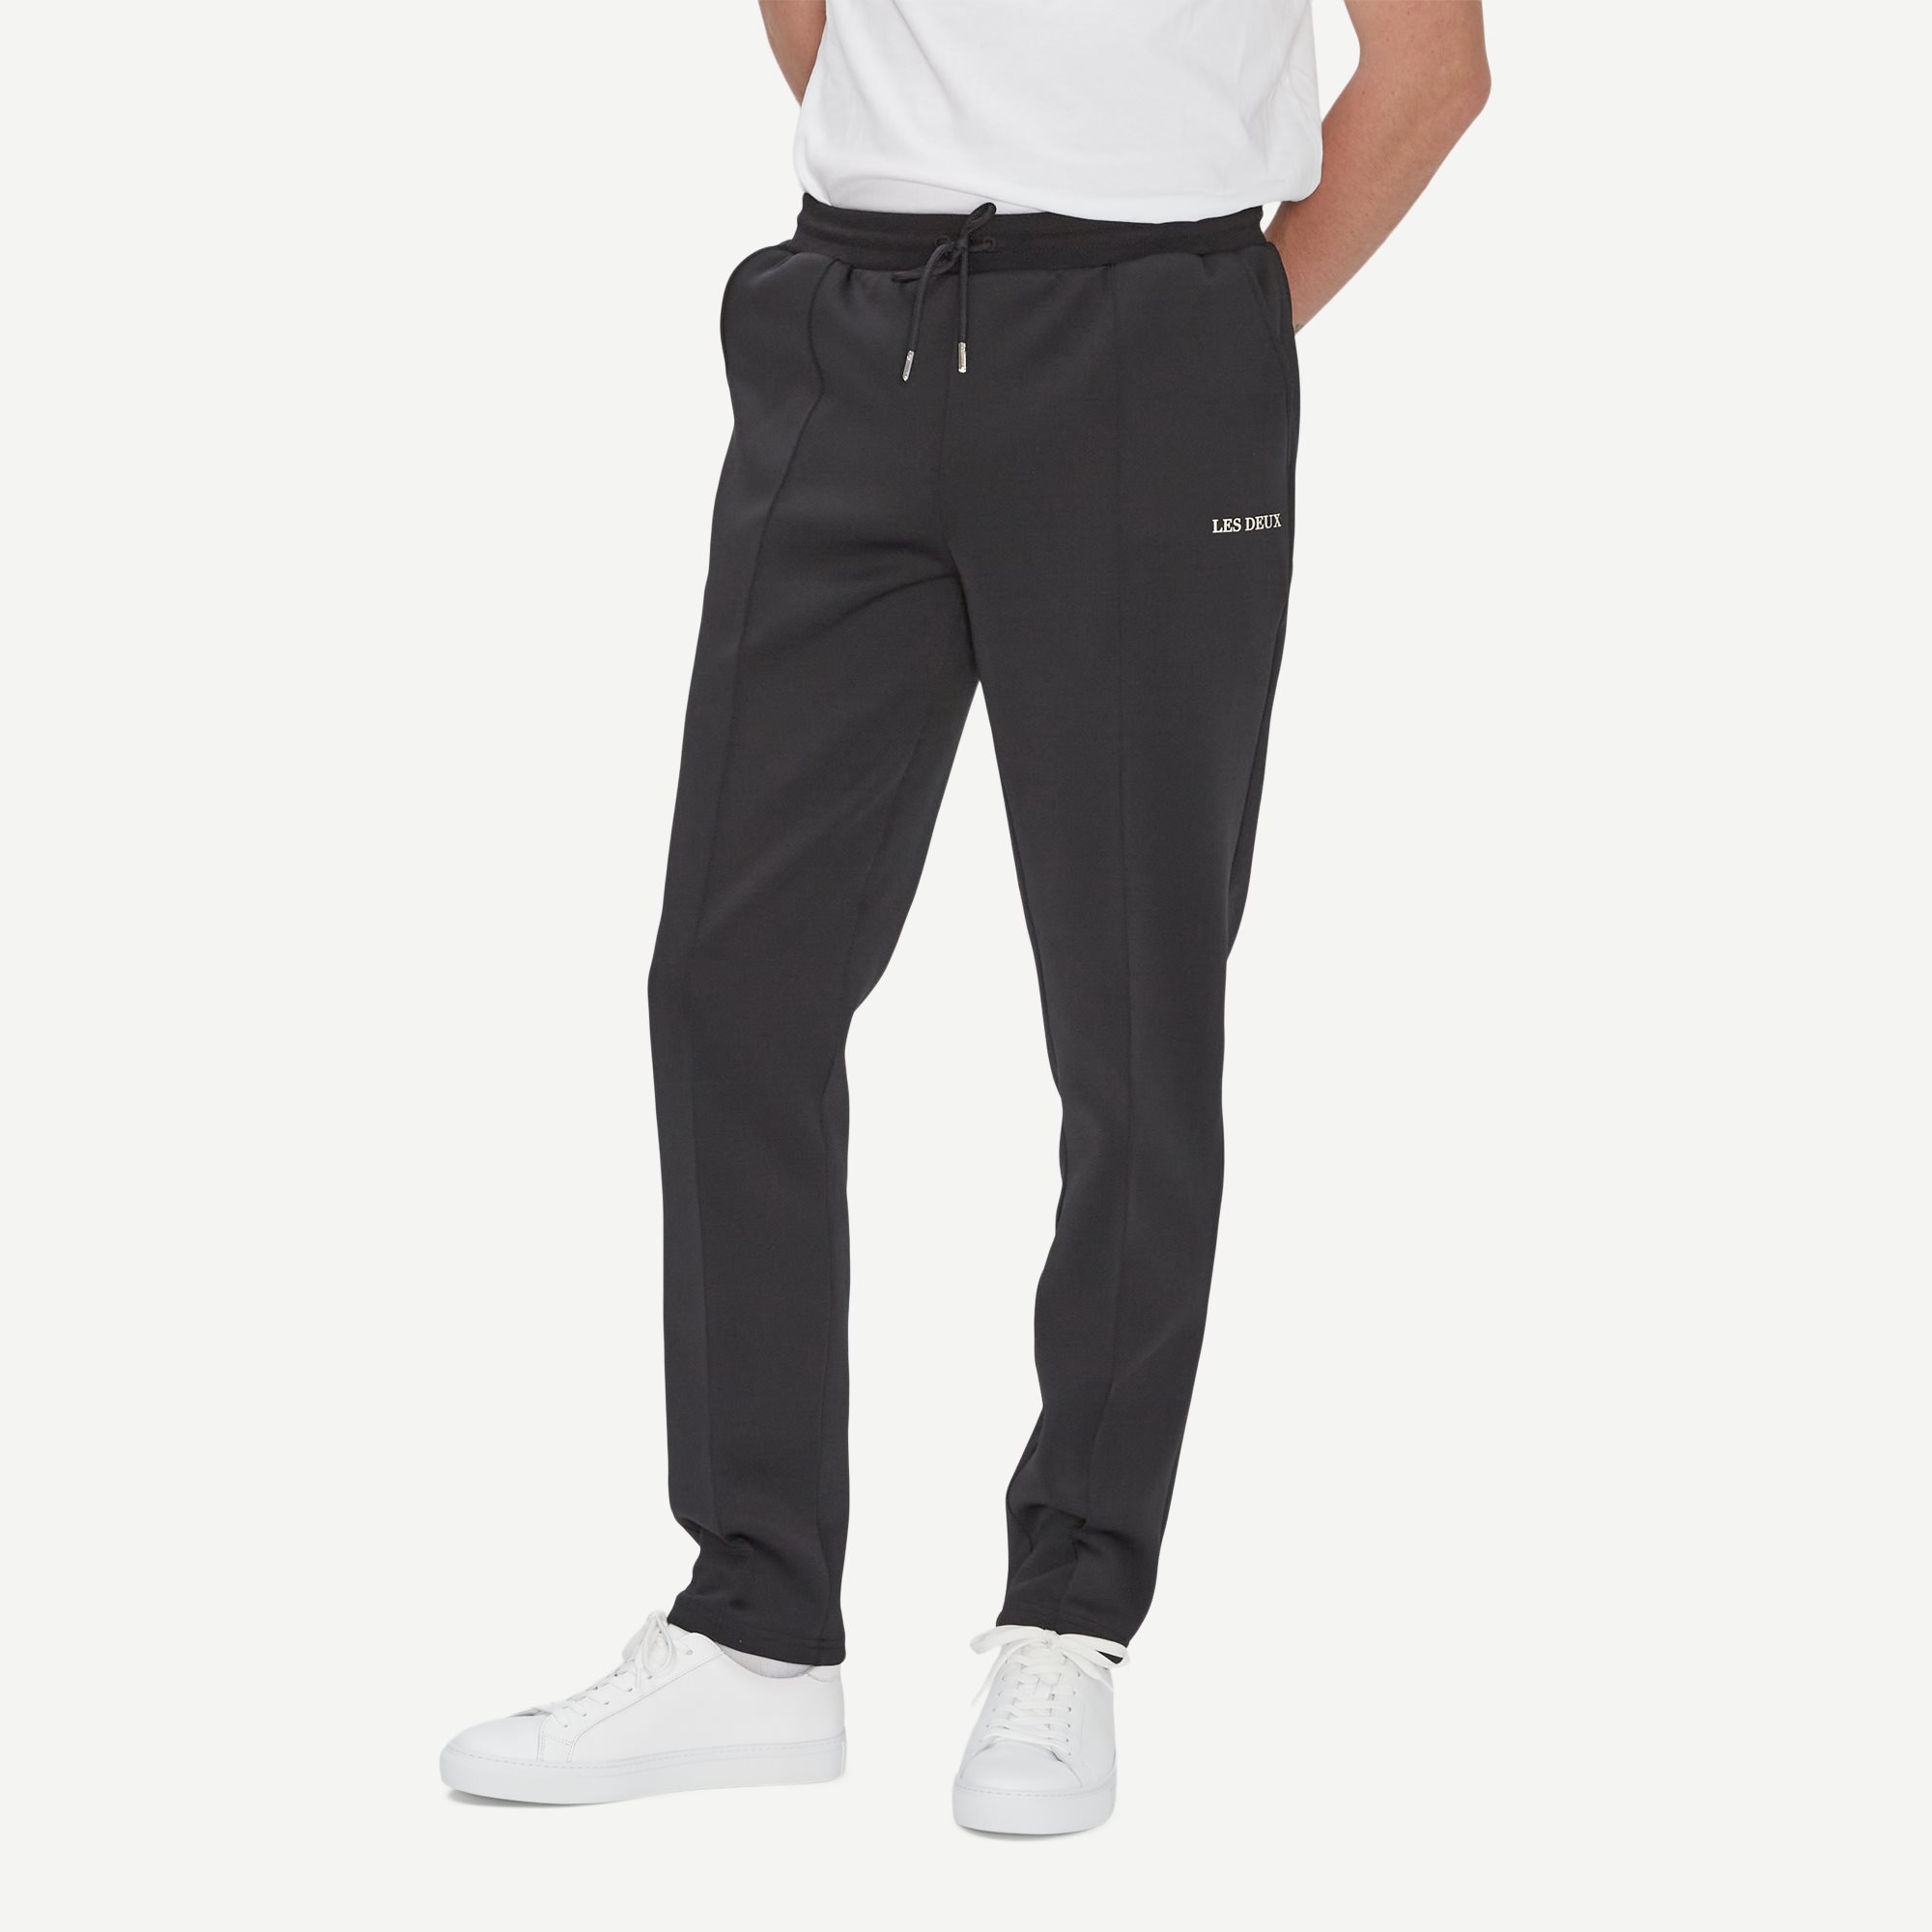 Trousers - Slim fit - Black